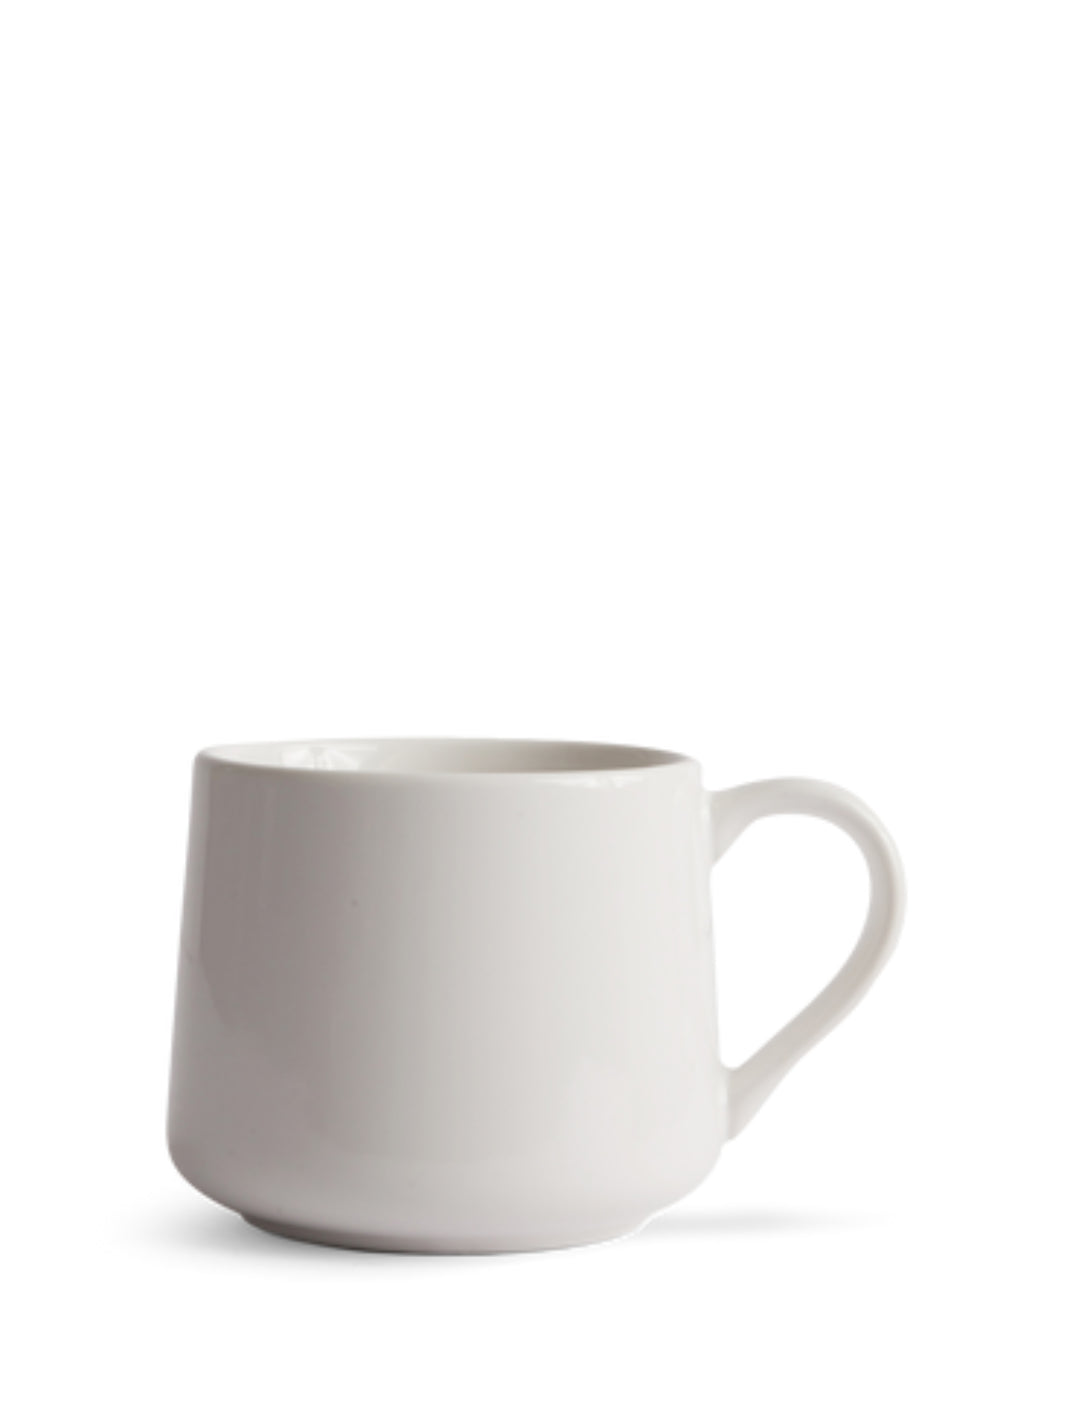 16 oz White Tall Ceramic Latte Mug